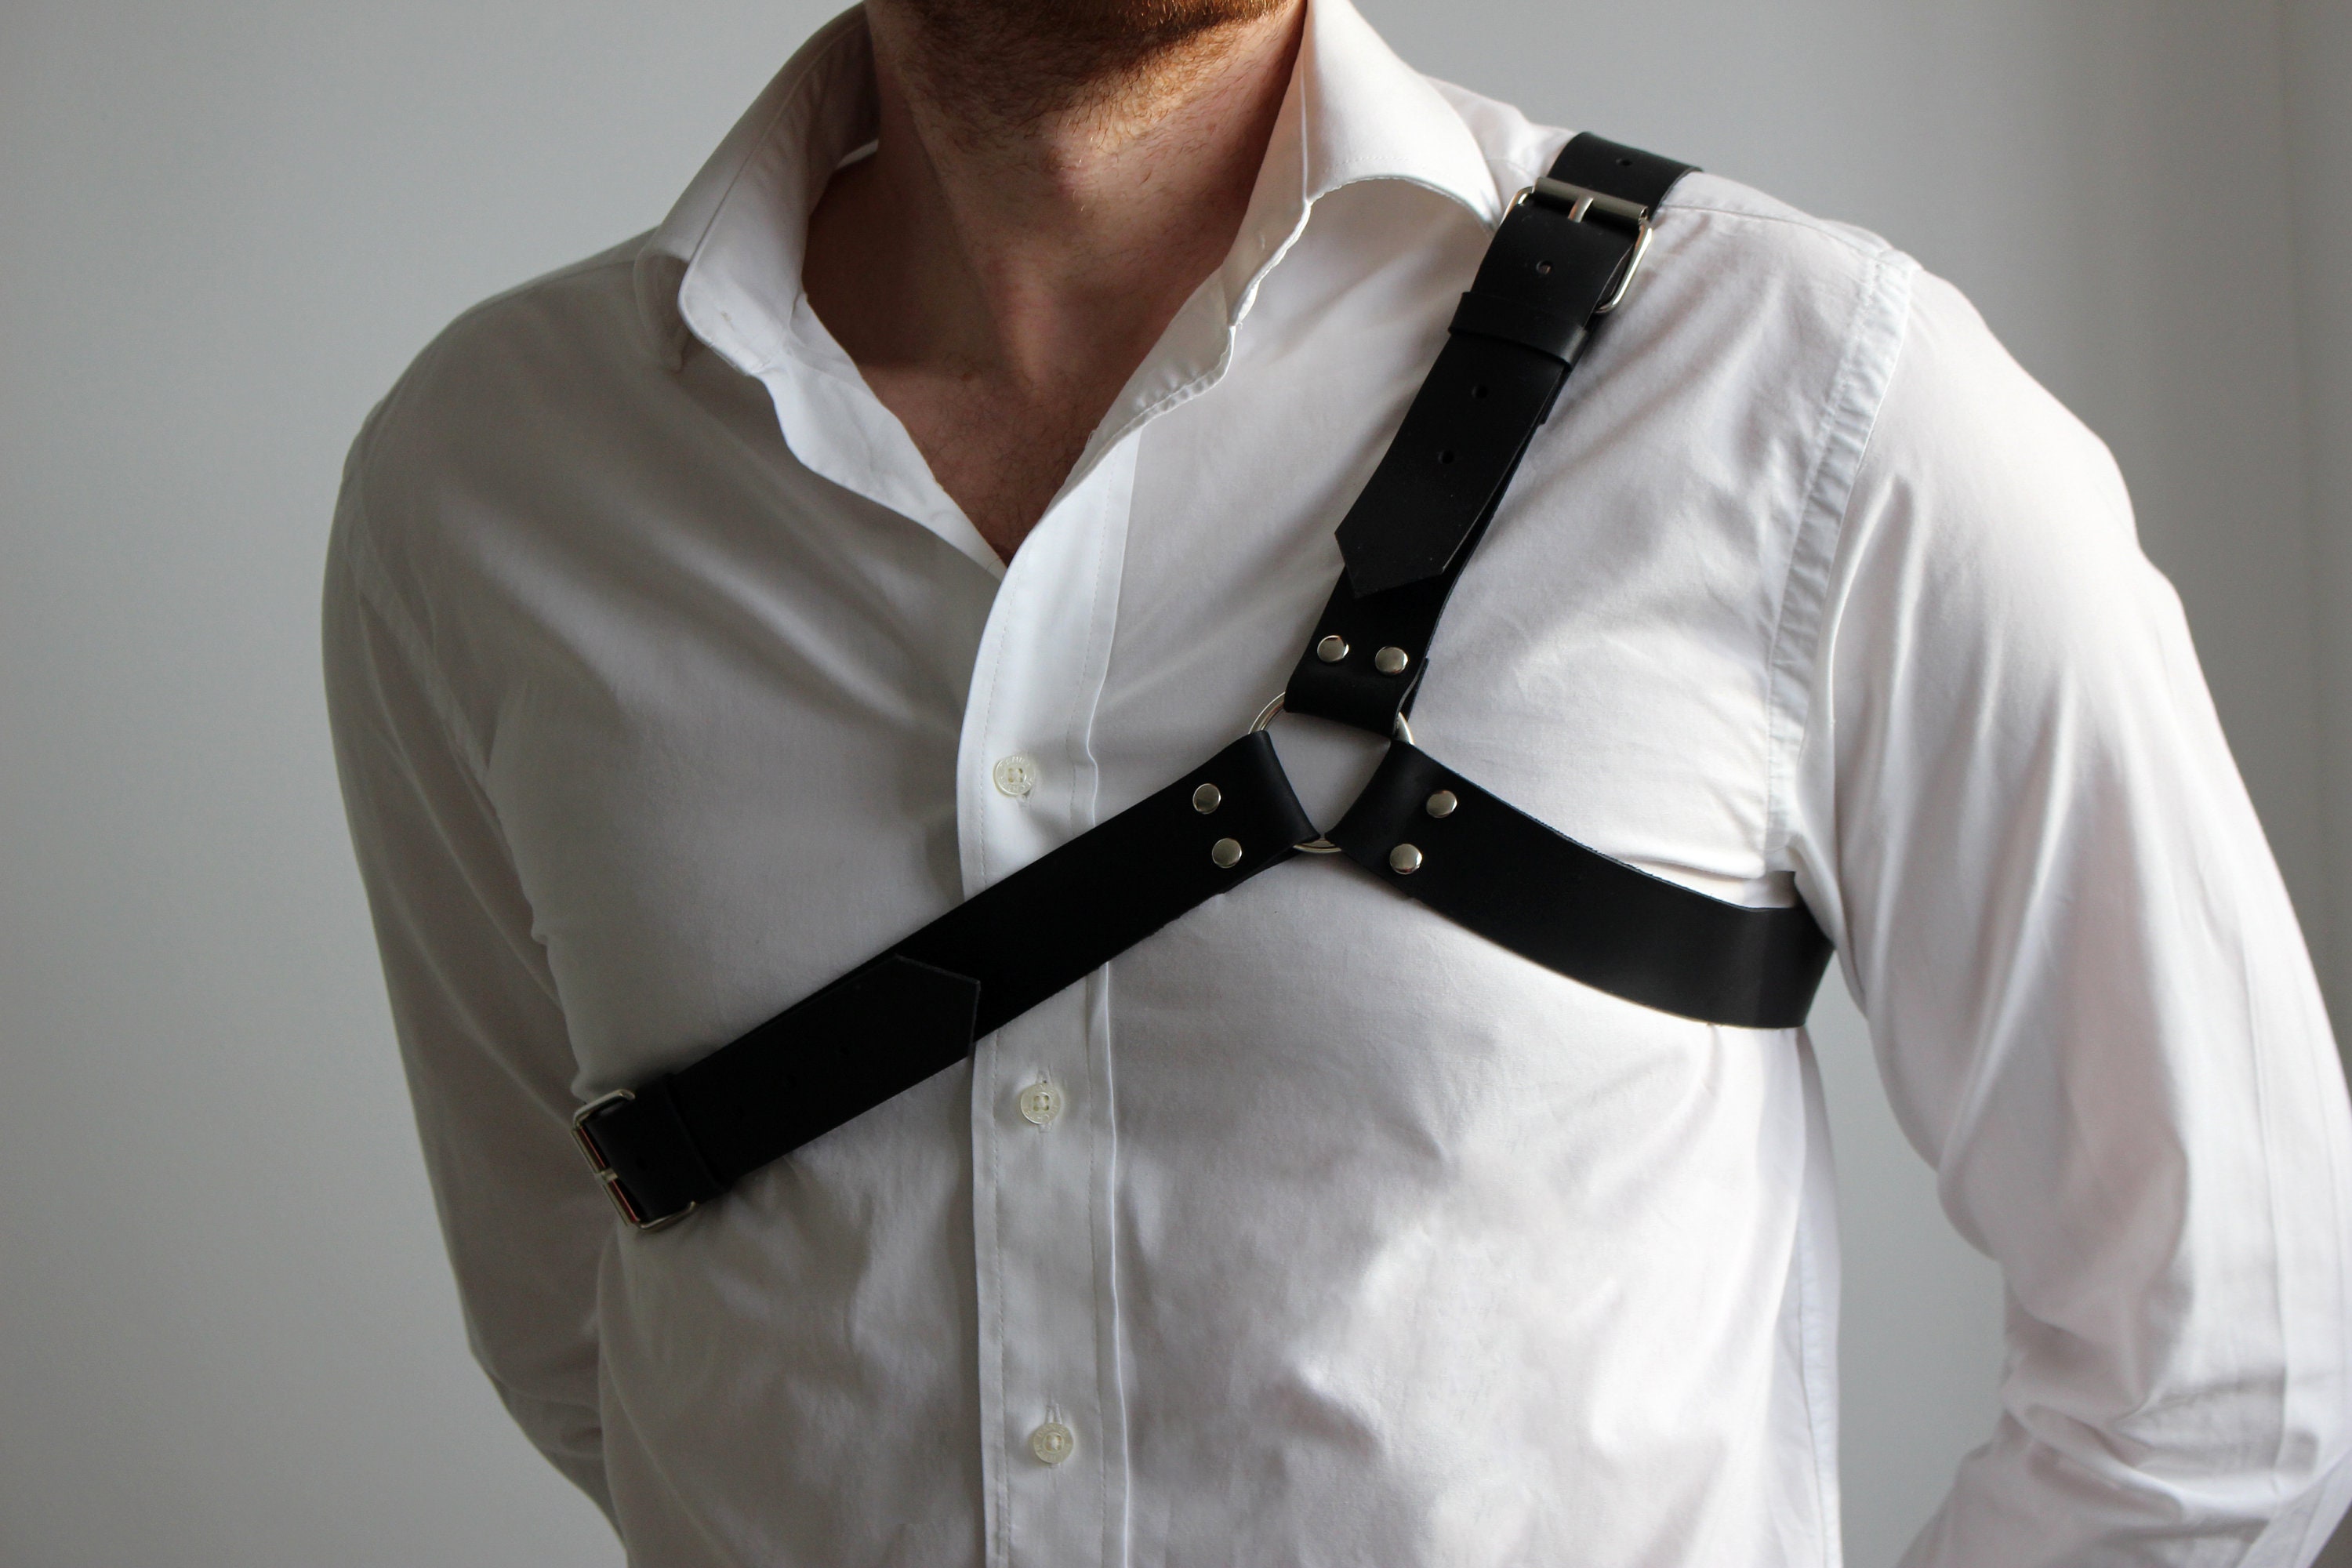 110 Men Harness ideas  leather harness, harness fashion, mens fashion